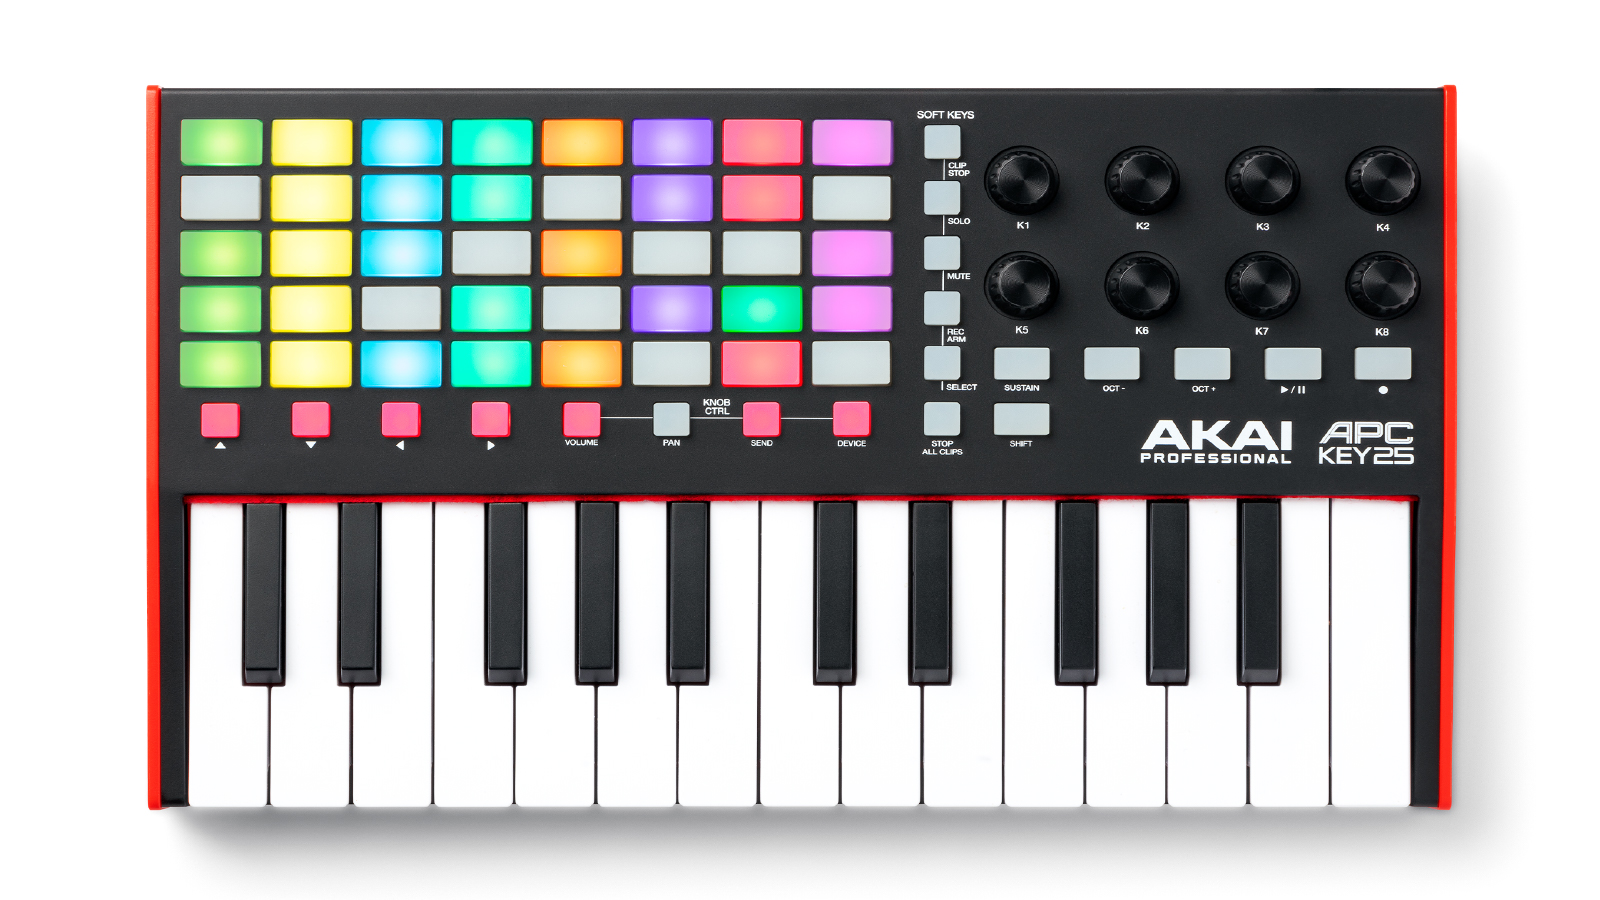 AKAI APC KEY25 MK2 - Ableton Live Controller with Keyboard